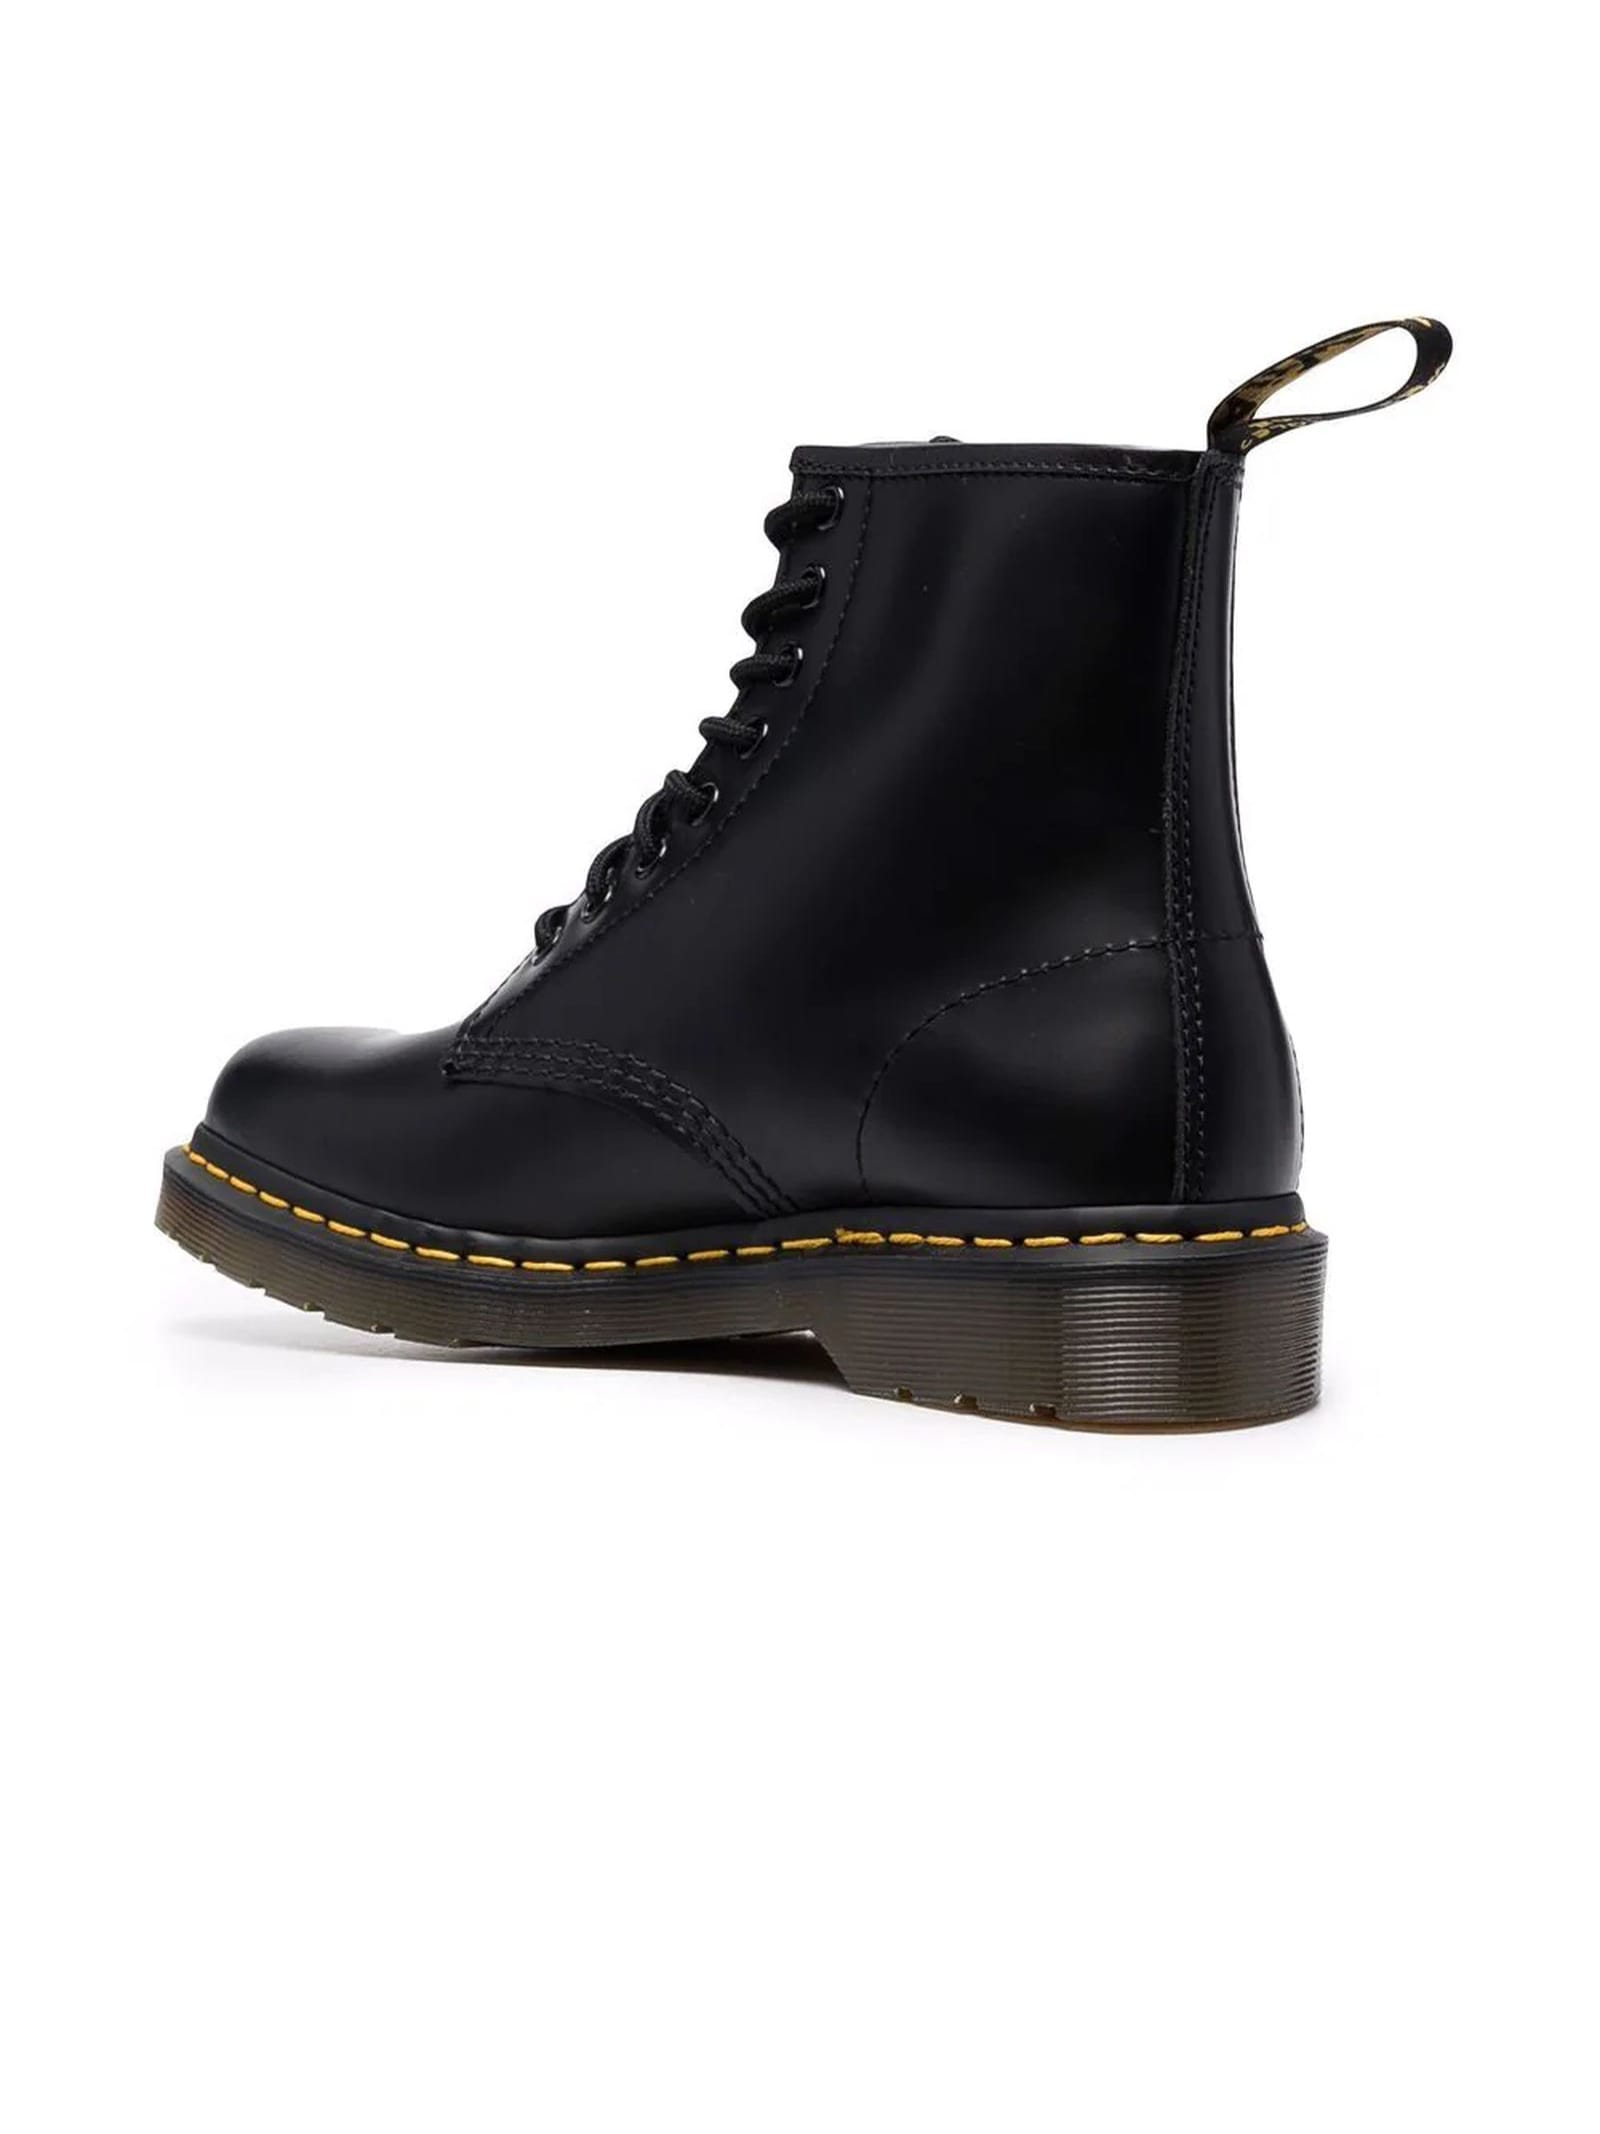 Shop Dr. Martens' Black 1460 Smooth-leather Boots